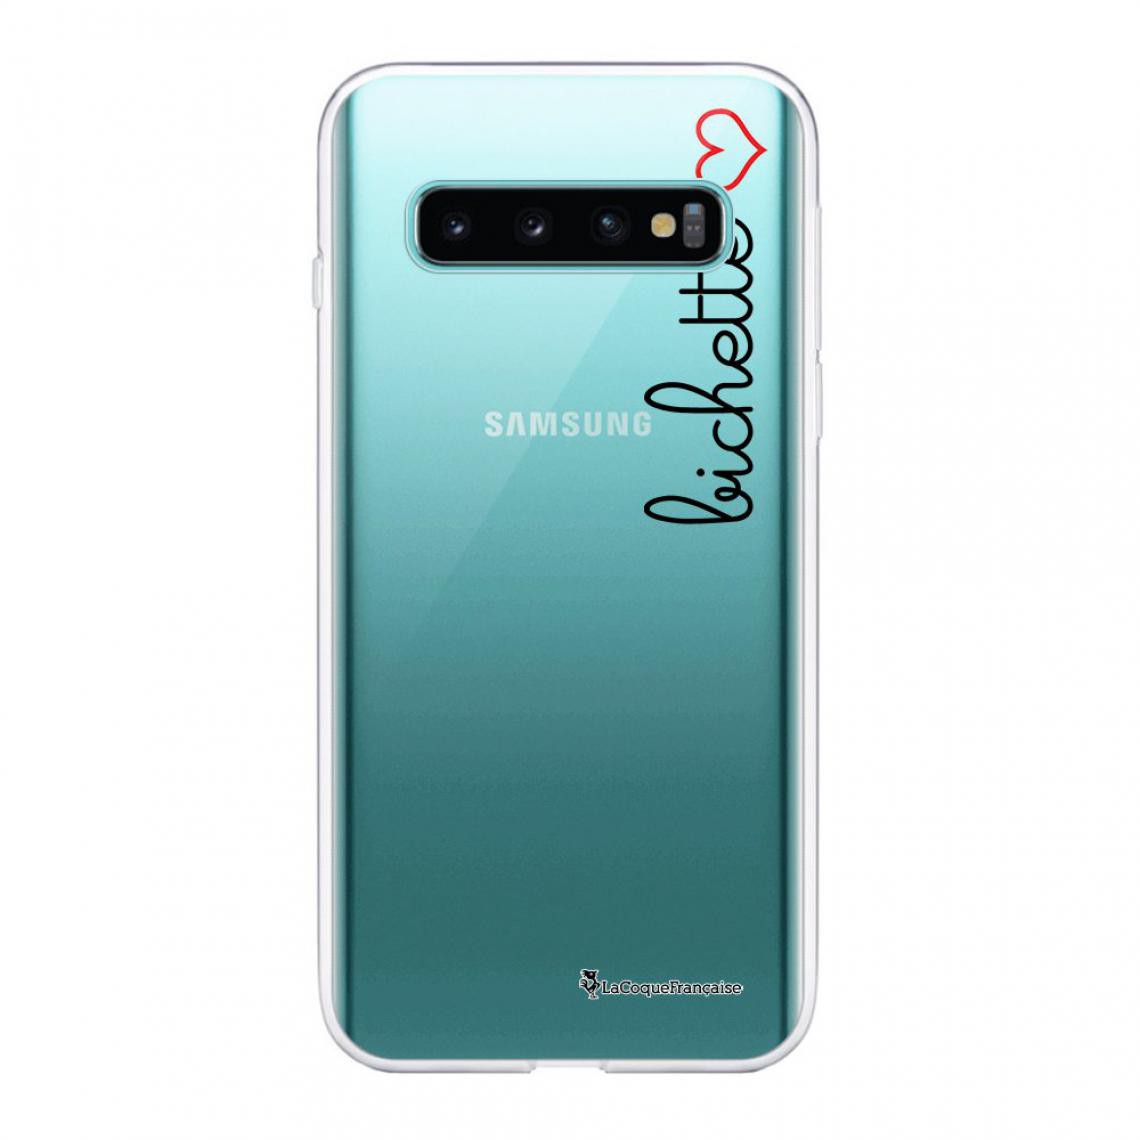 La Coque Francaise - Coque Samsung Galaxy S10 souple silicone transparente - Coque, étui smartphone